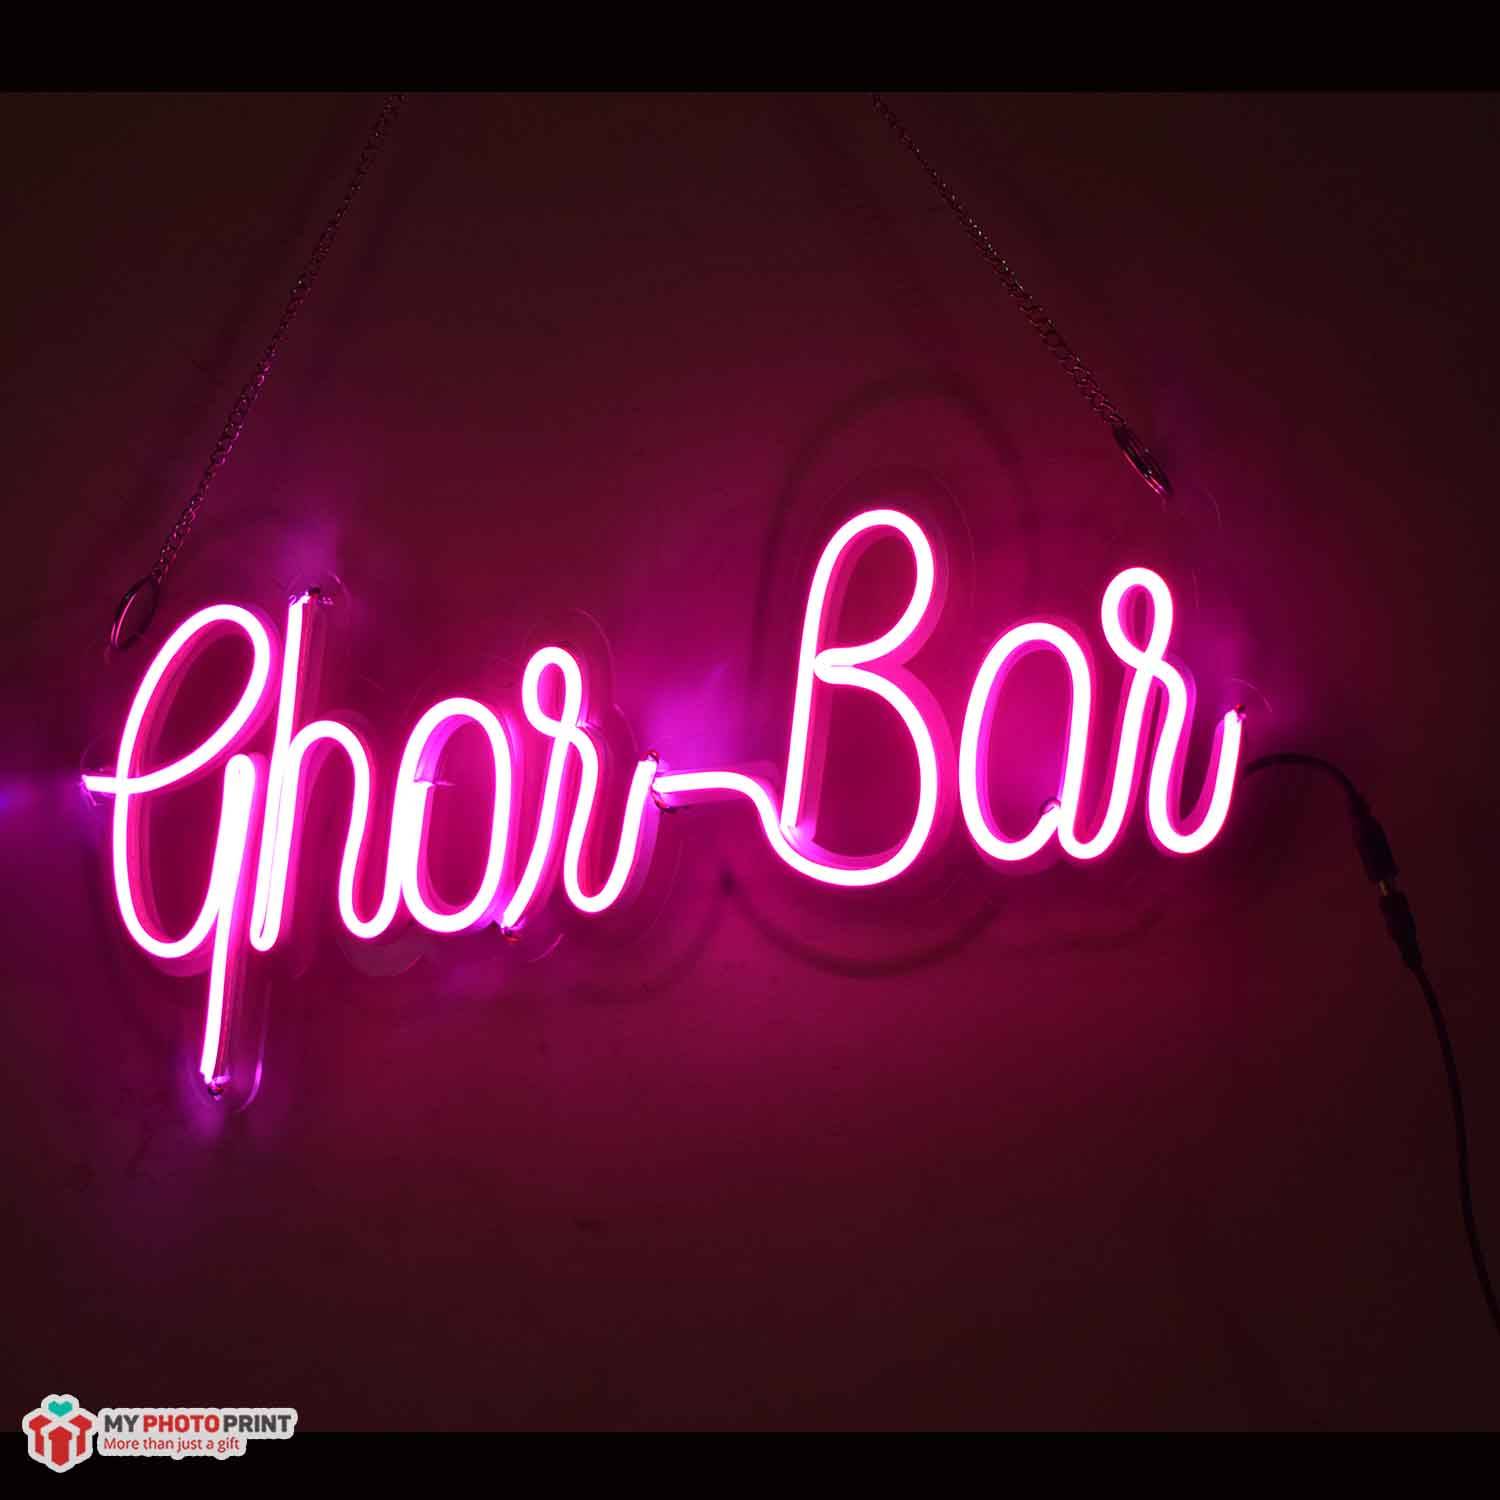 Neon Ghar-Bar Led Neon Sign Decorative Lights Wall Decor